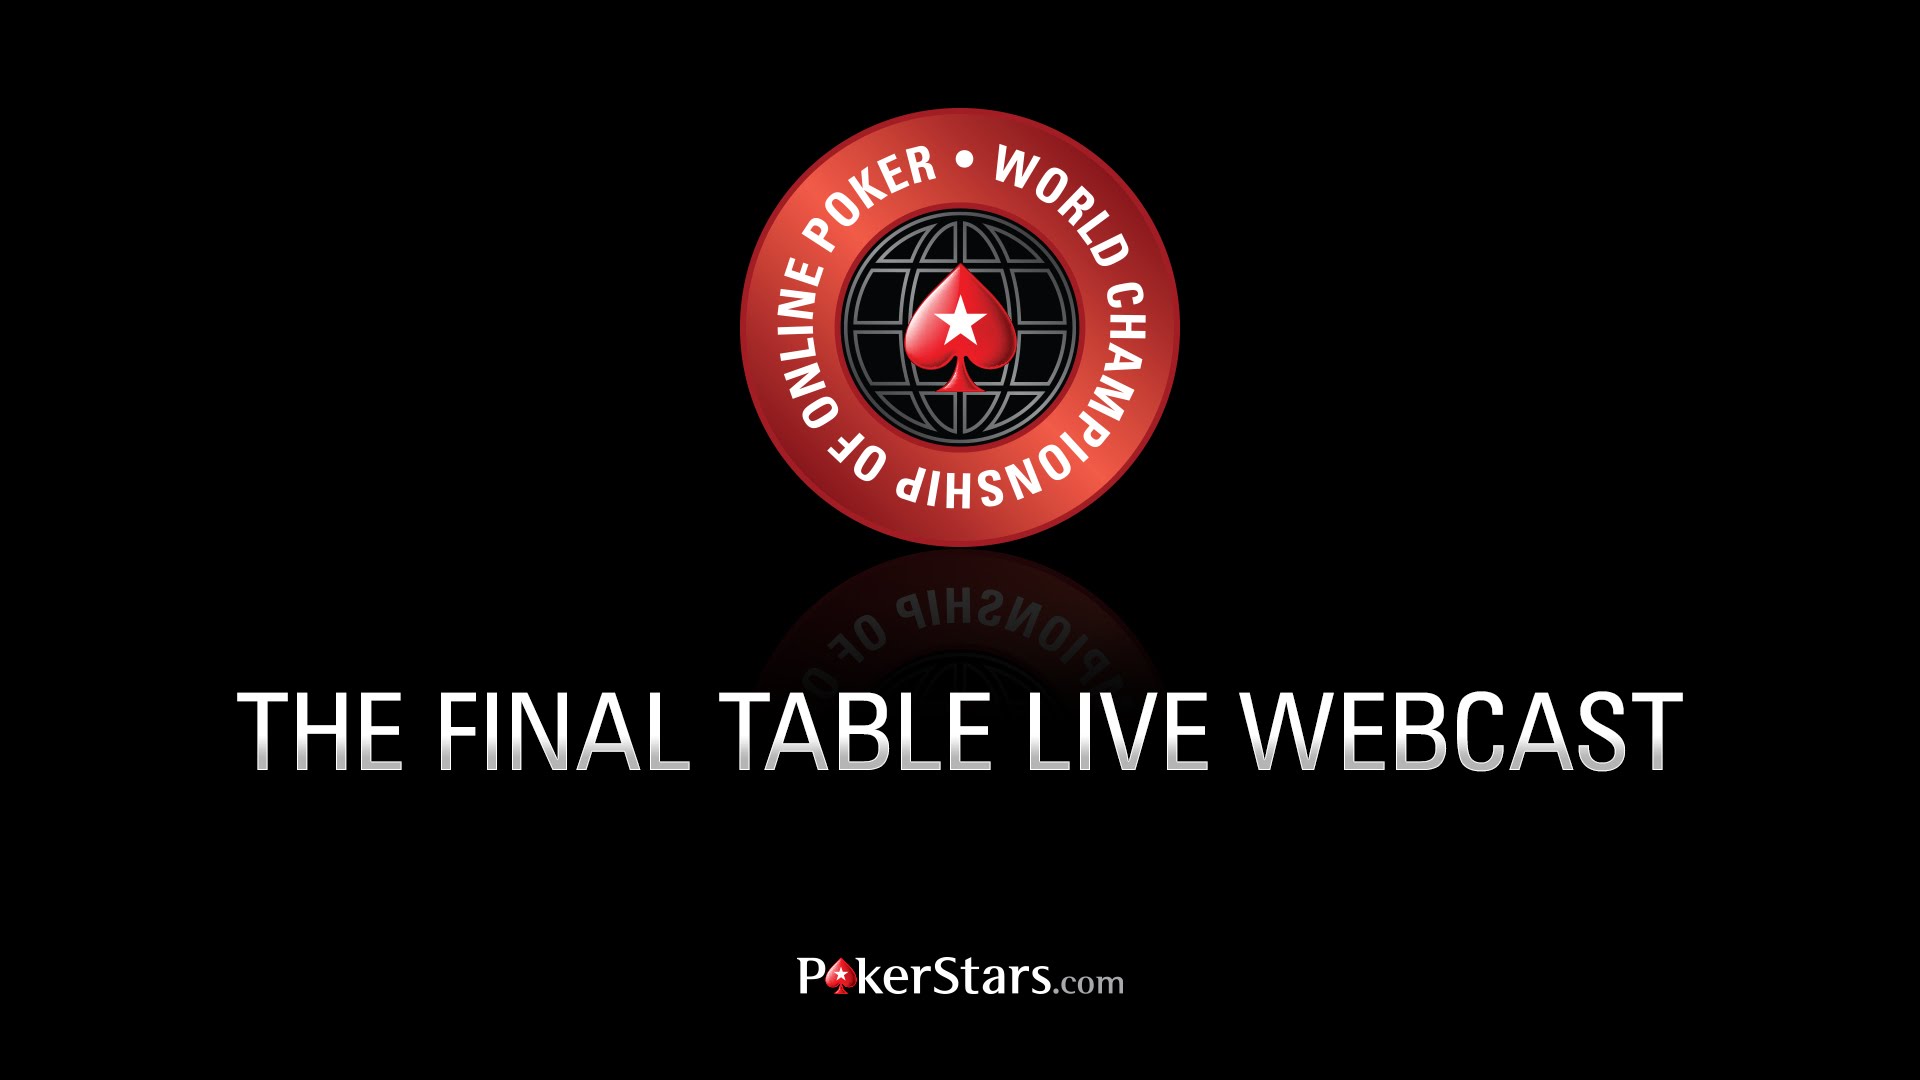 чемпионат мира по онлайн покеру WCOOP 2016